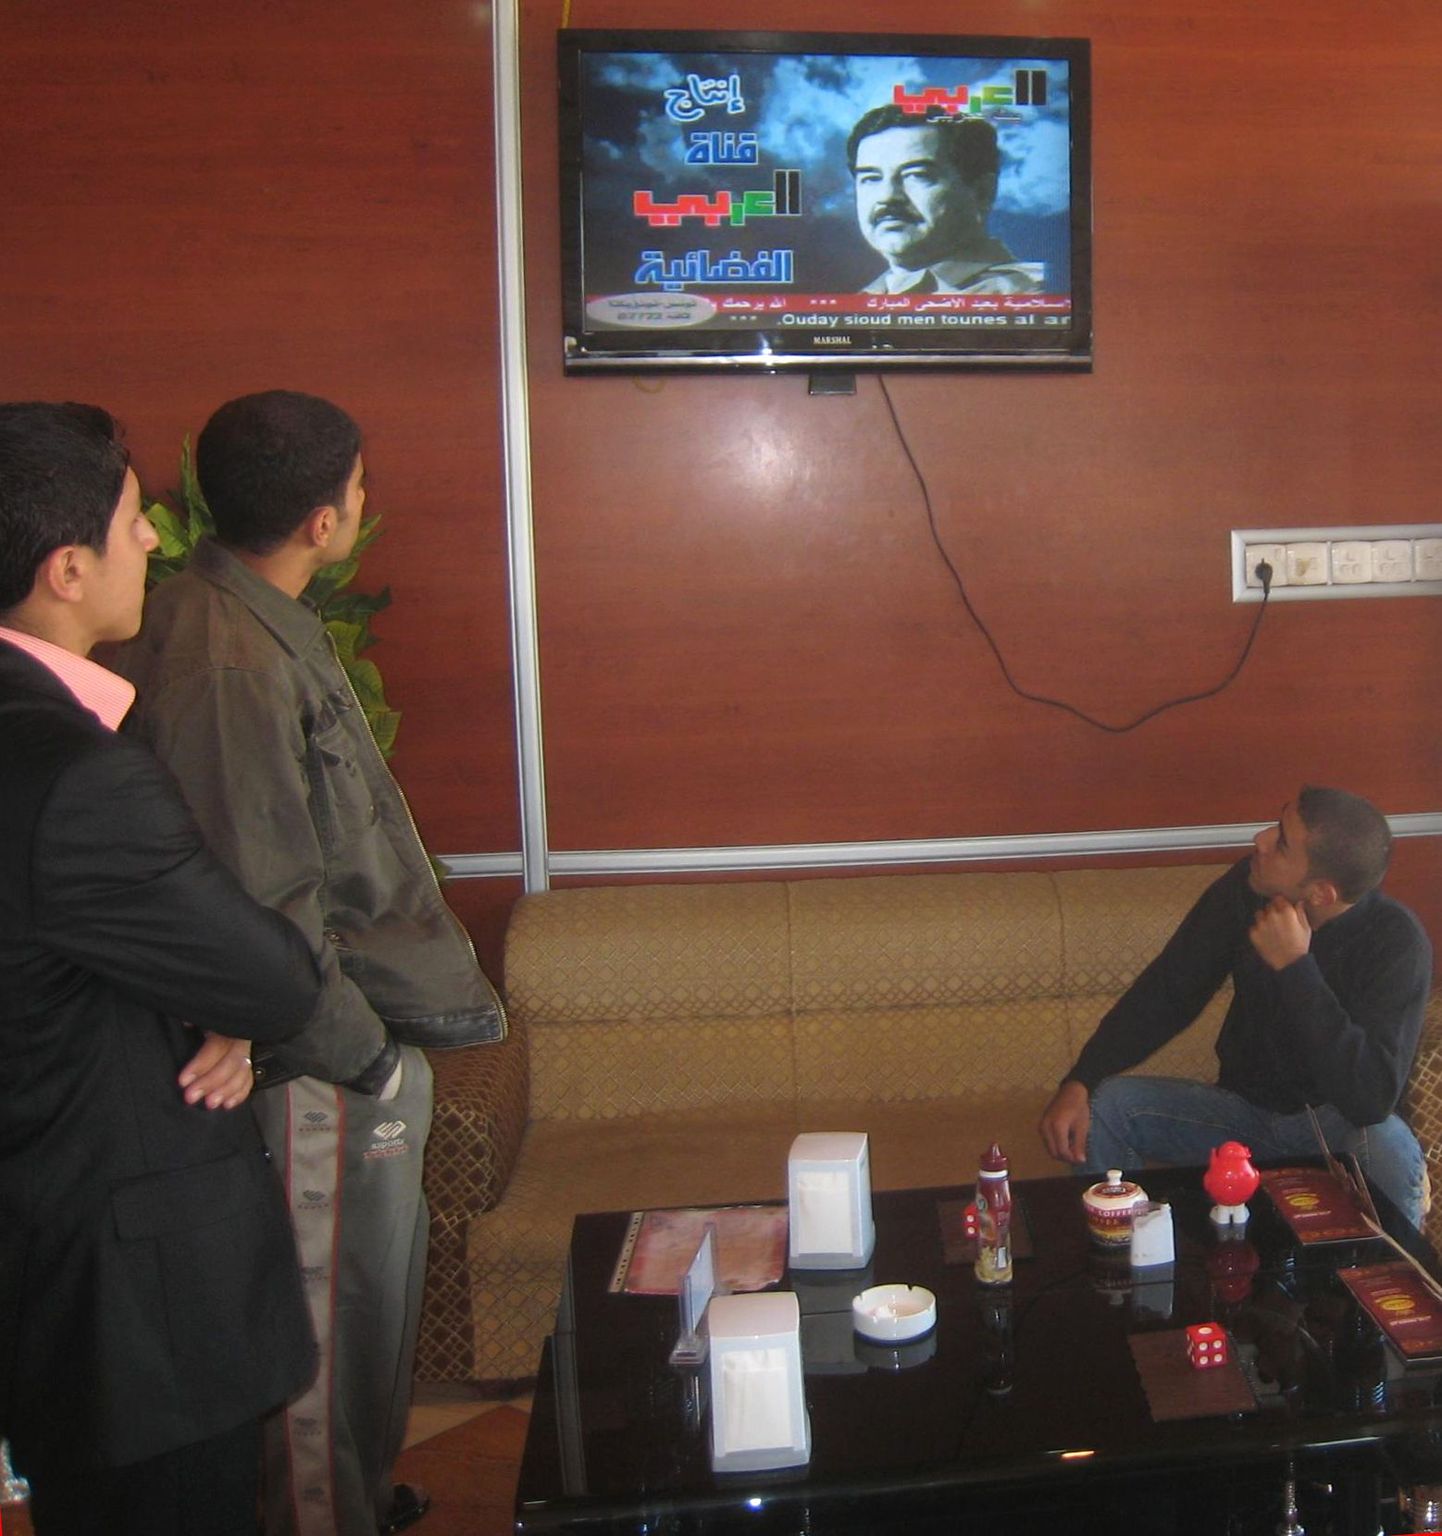 Iraaklased Saddam Husseini nostalgiakanalit vaatamas